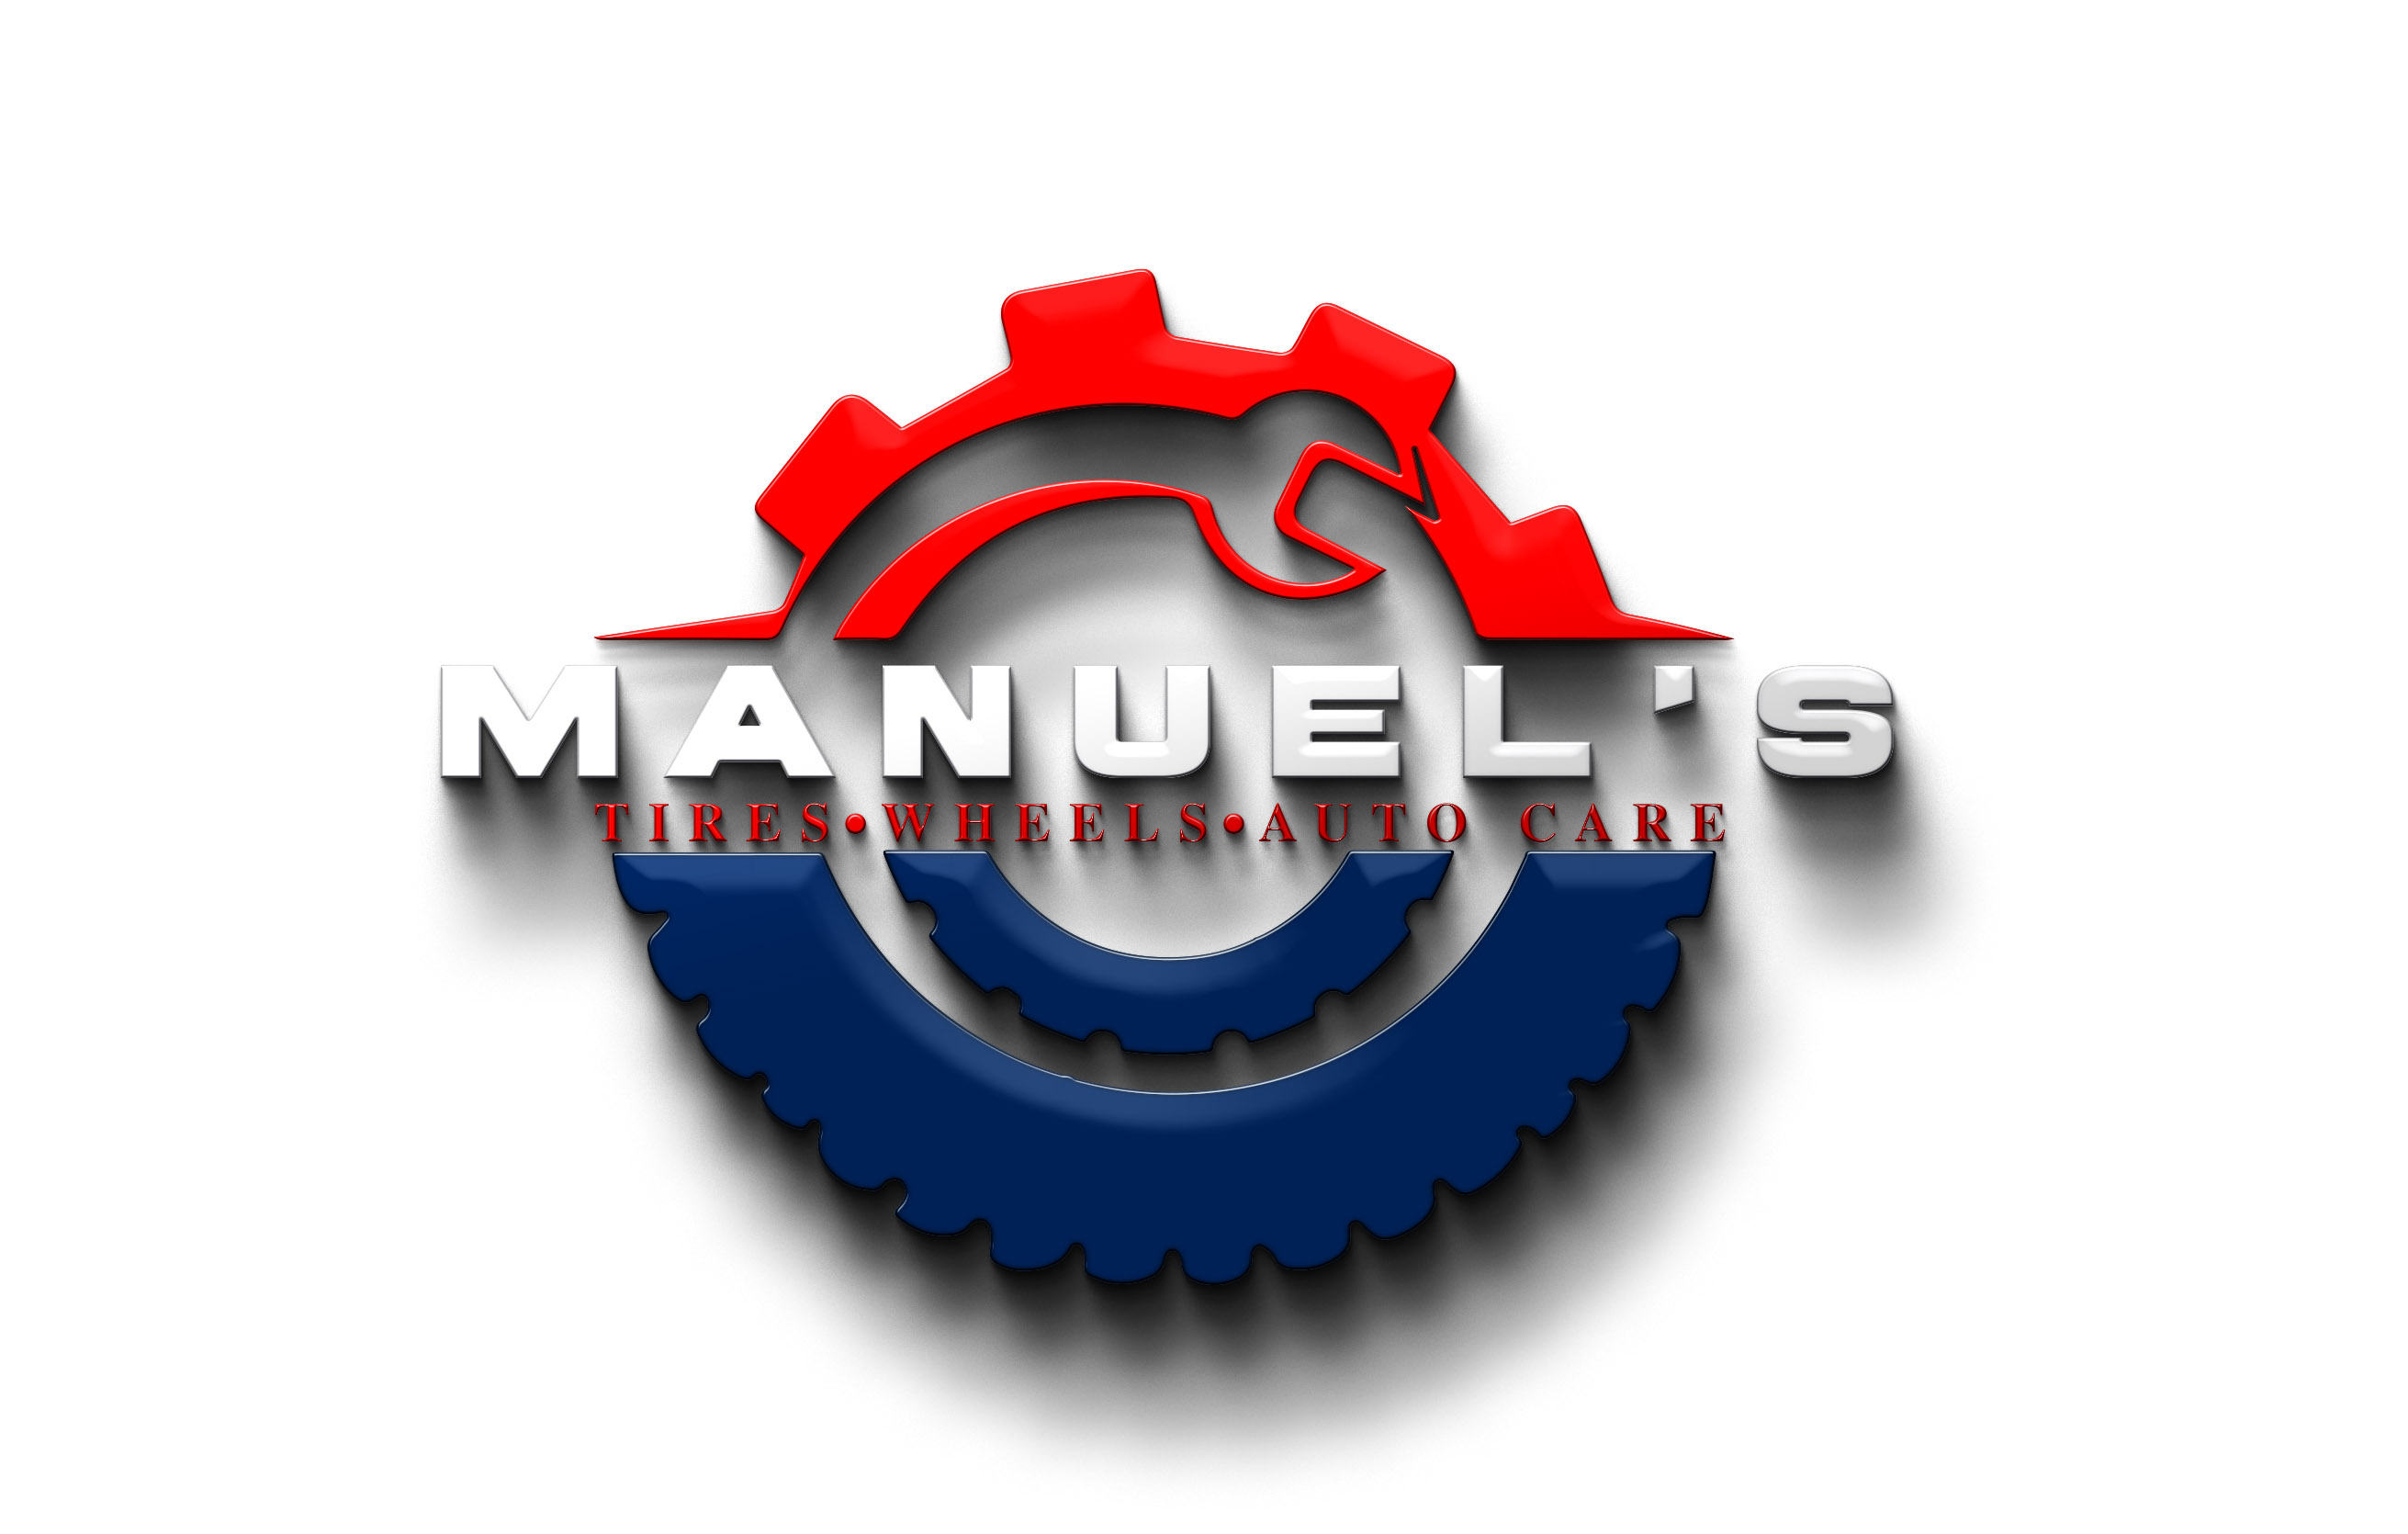 Manuel’s Tires, Wheel, Auto Care